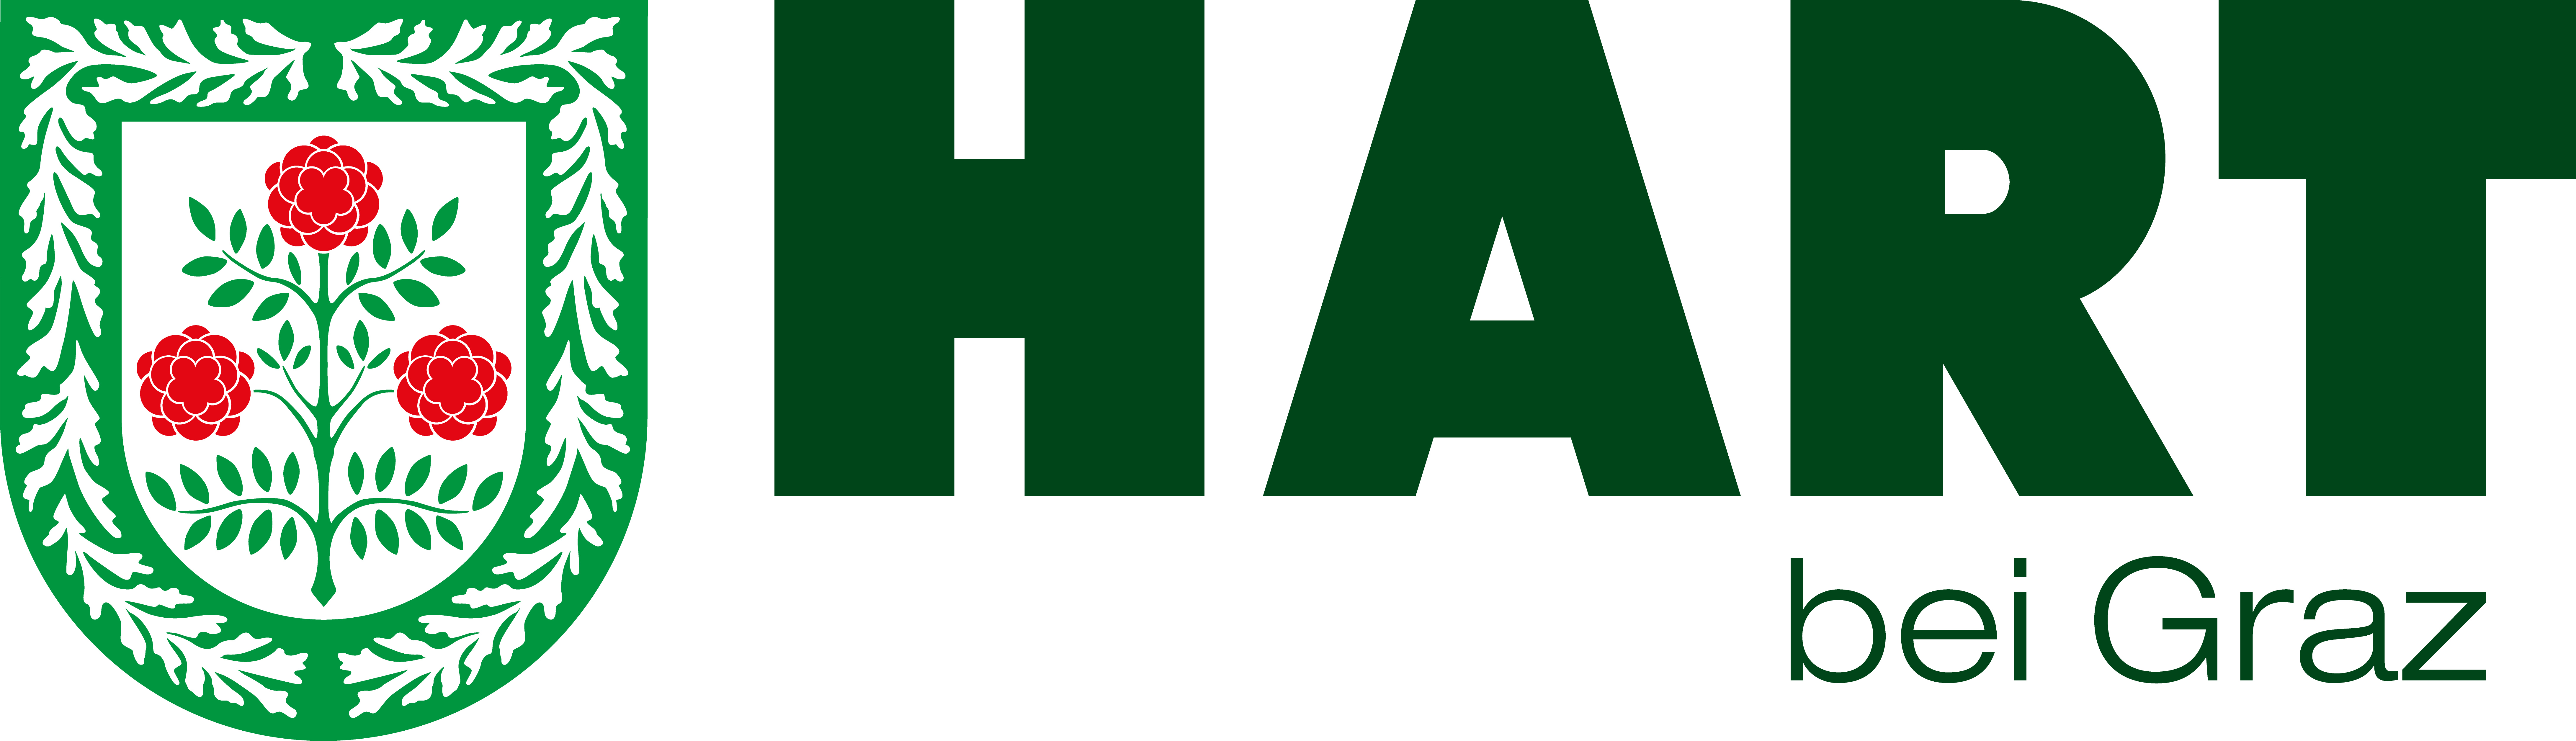 Logo HbG Wappen_schrift_ohne_Schutz 0_003_2018.jpg